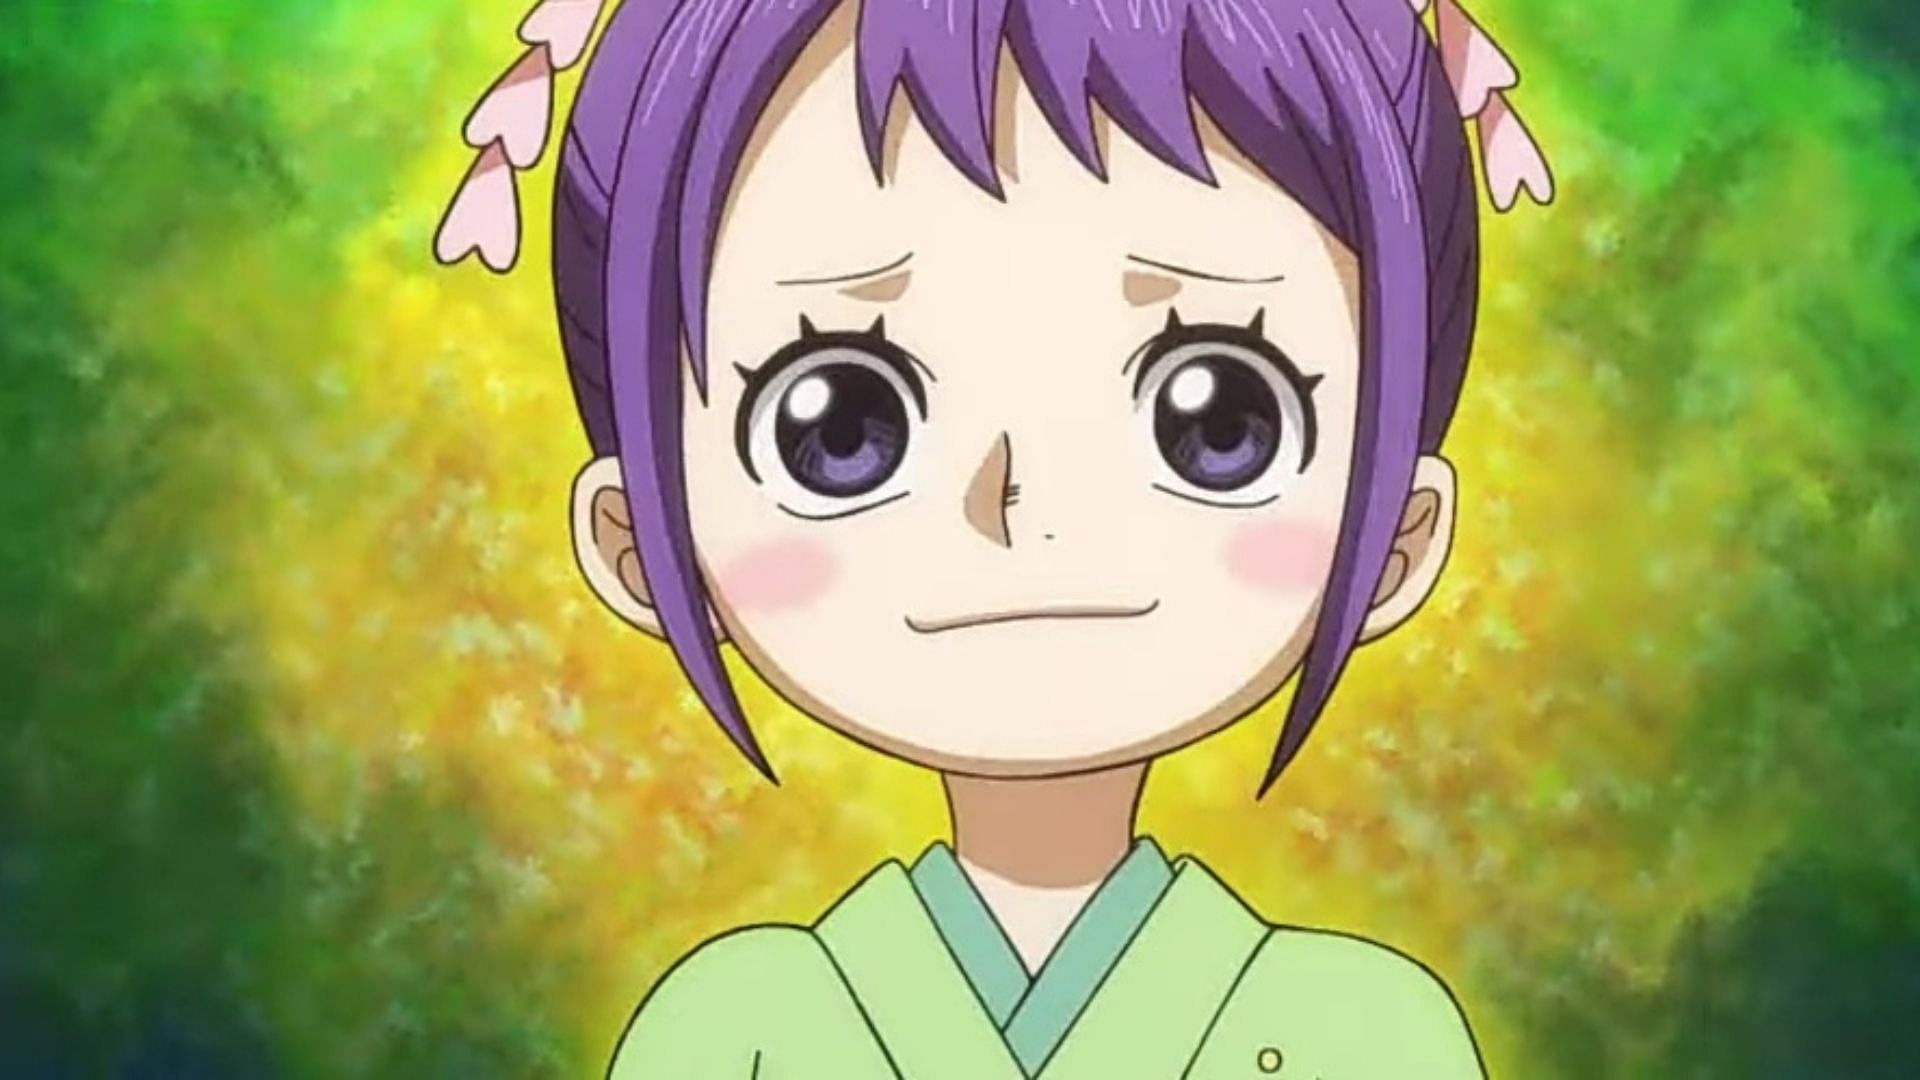 Otama as seen in the anime (Image via Toei Animation)